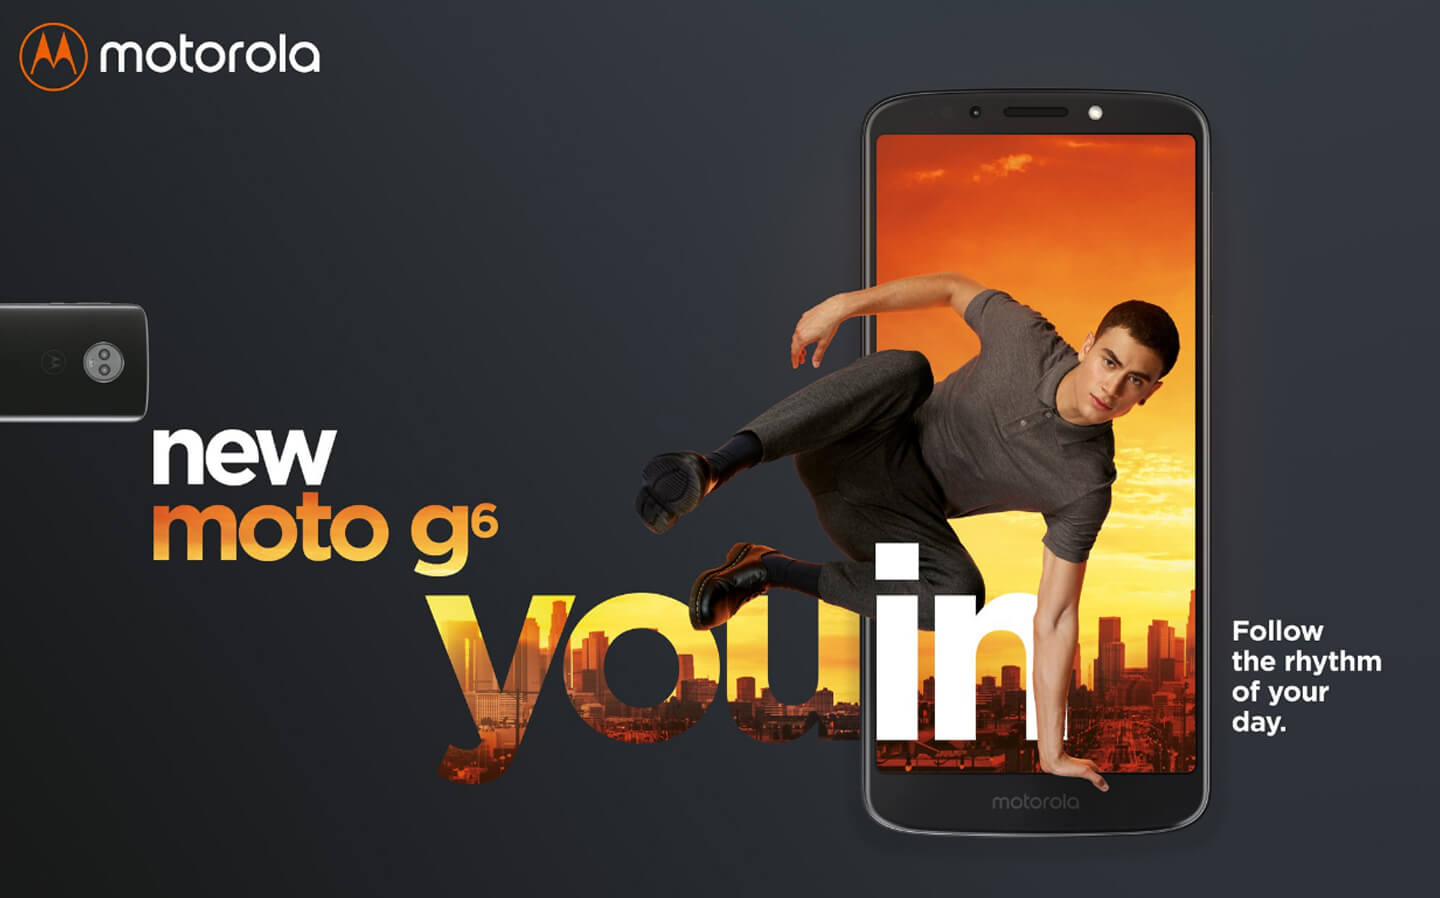 Motorola Moto G6 smartphone